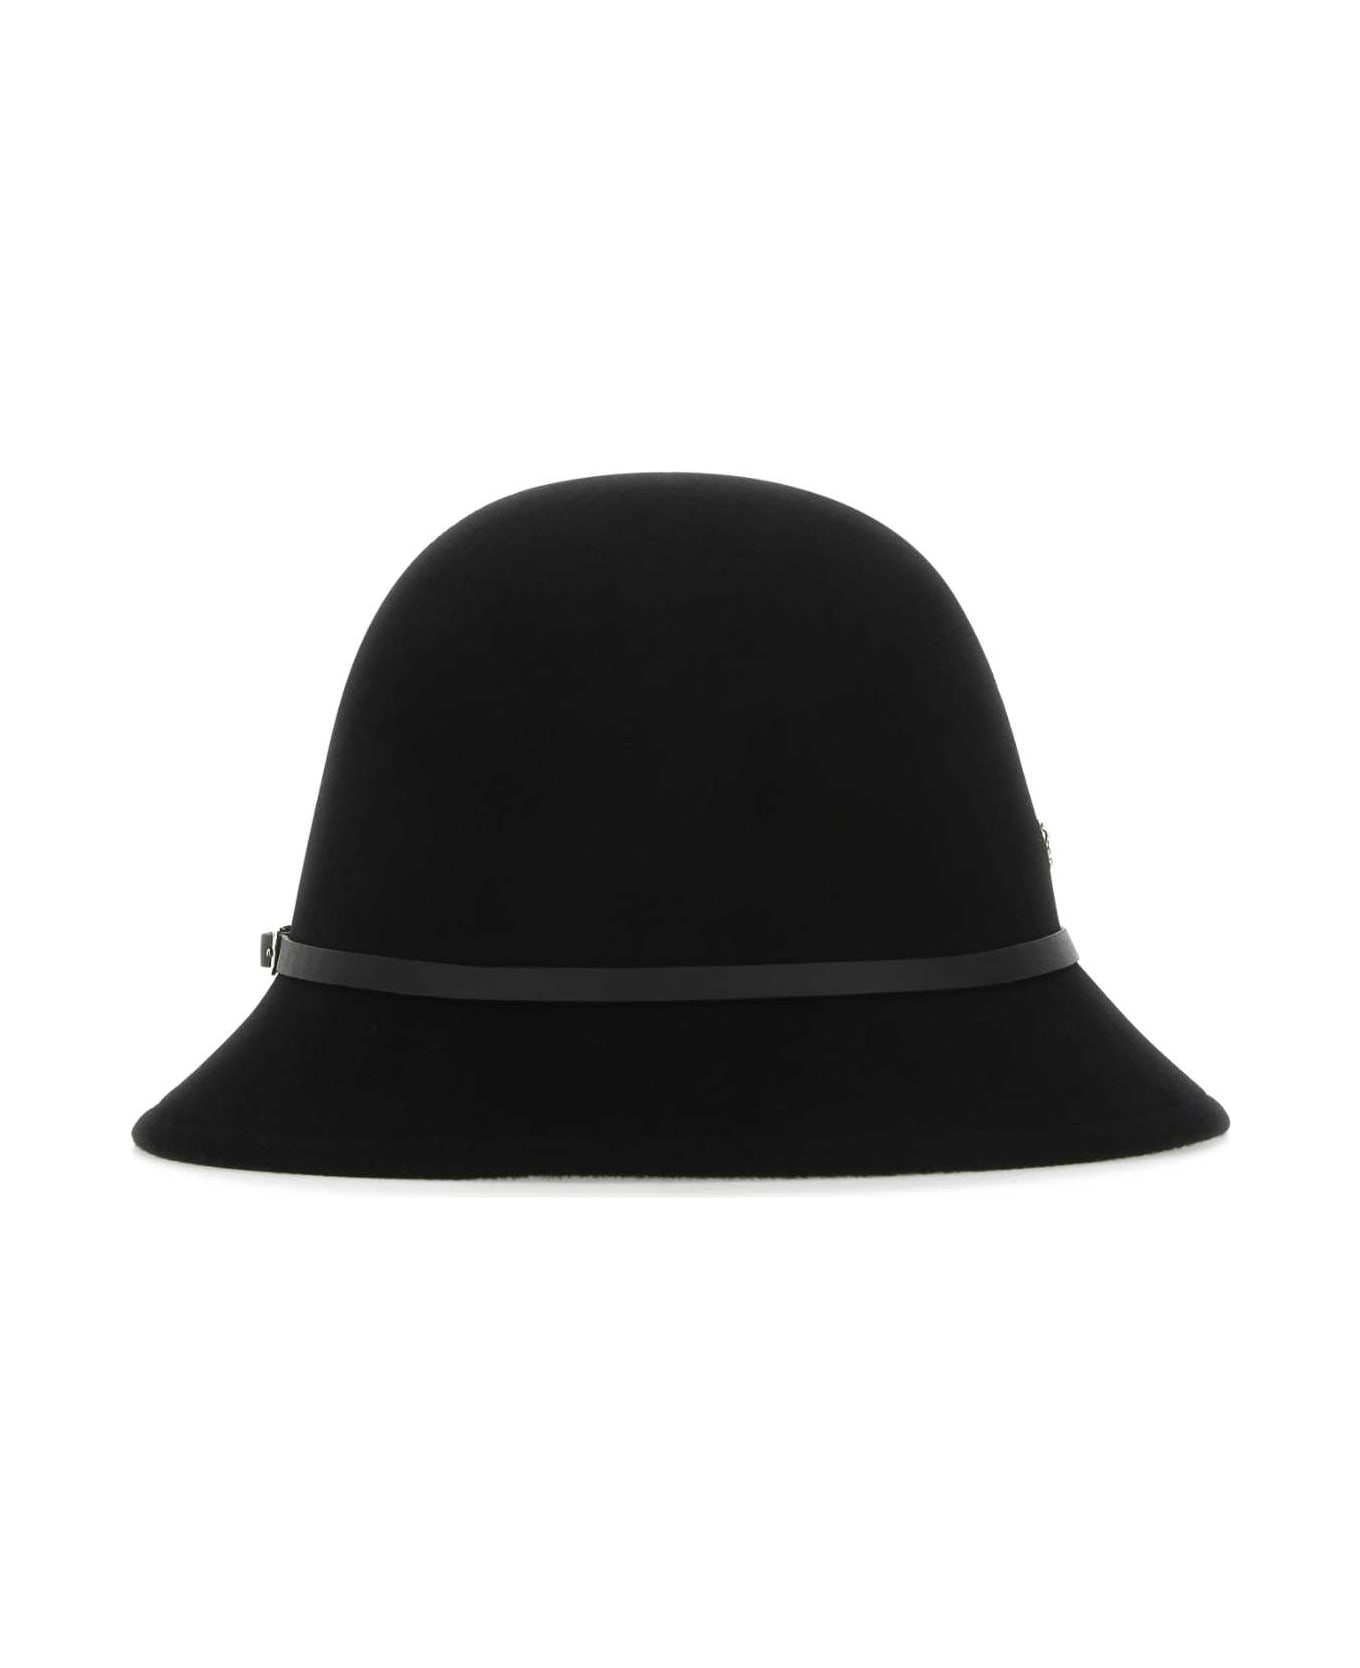 Helen Kaminski Black Wool Hat - BLACKBLACK